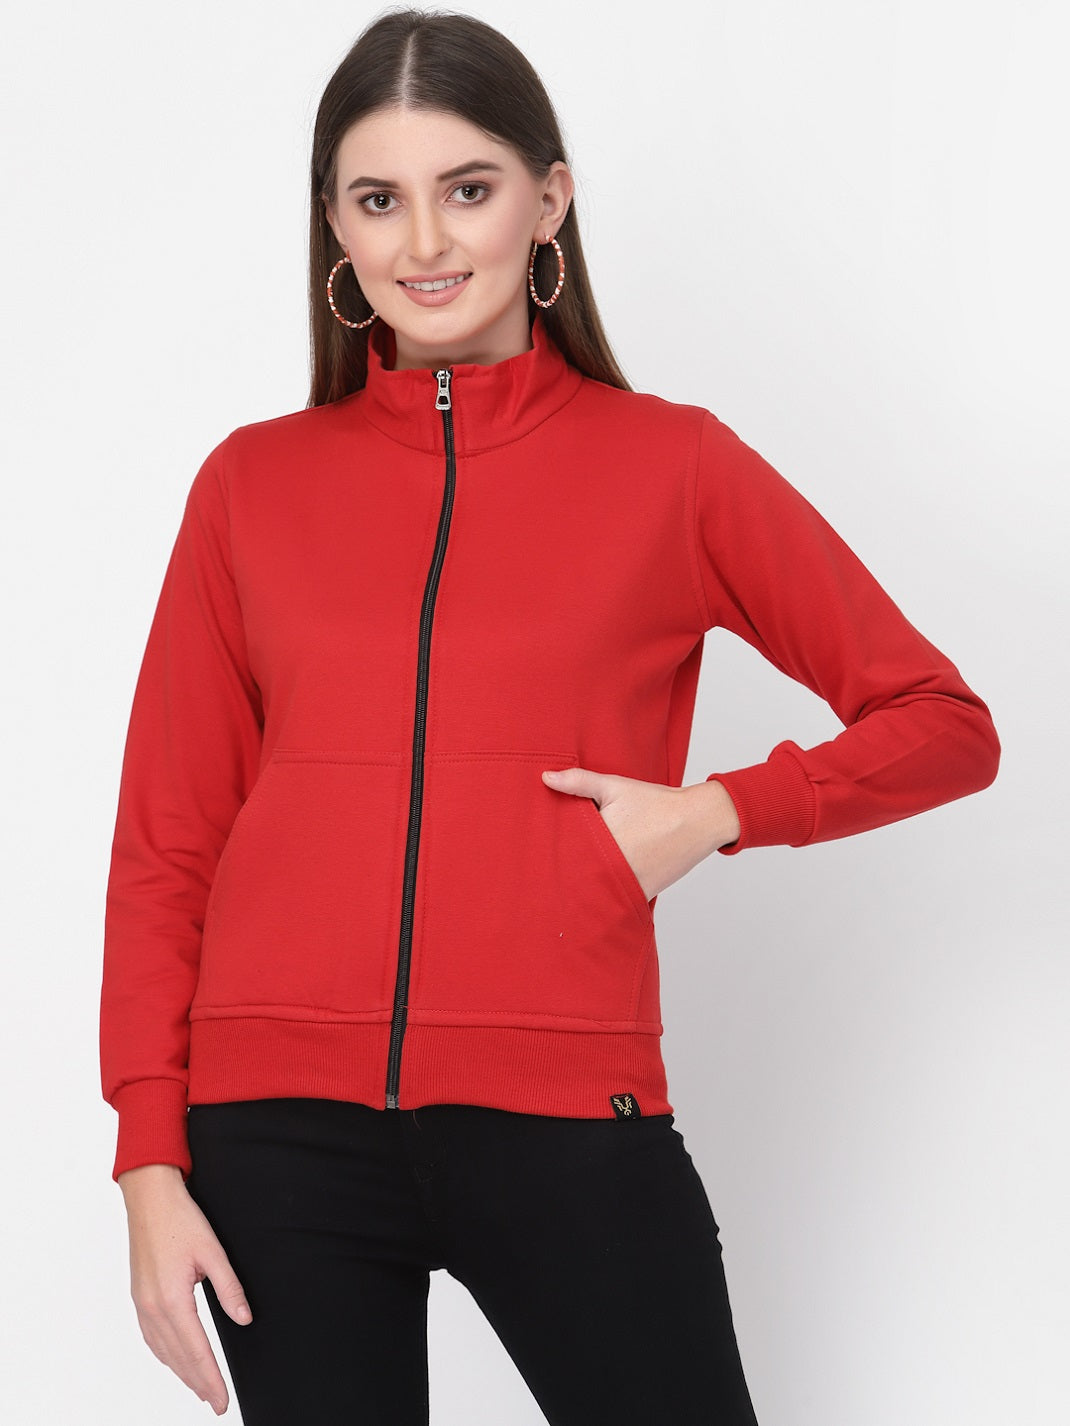 UZARUS Women's Cotton Fleece Latest Stylish Sweatshirt Jacket